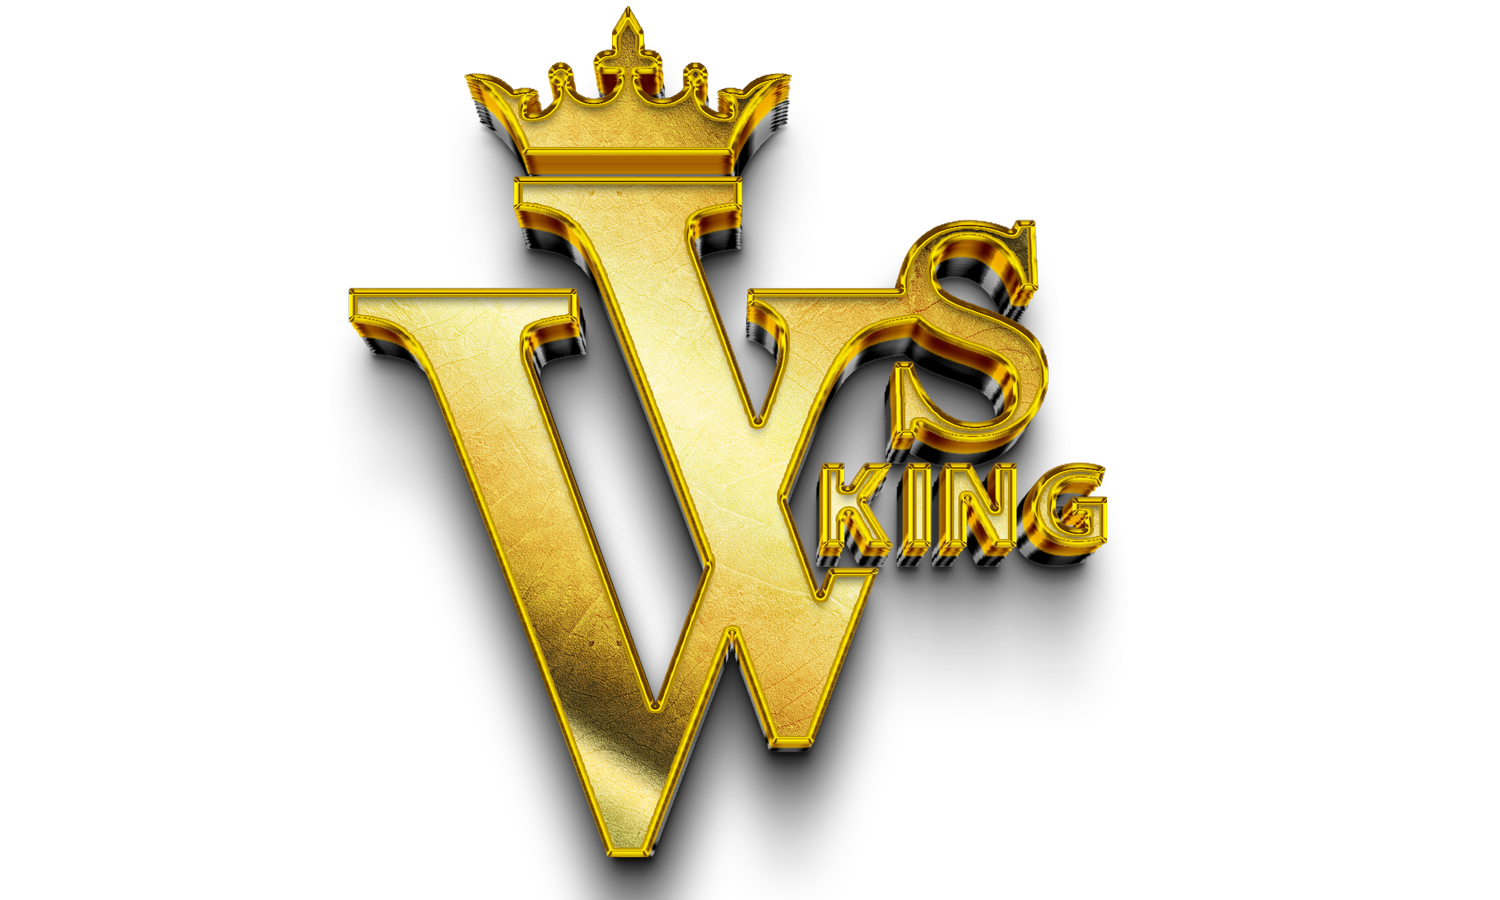 VVS King